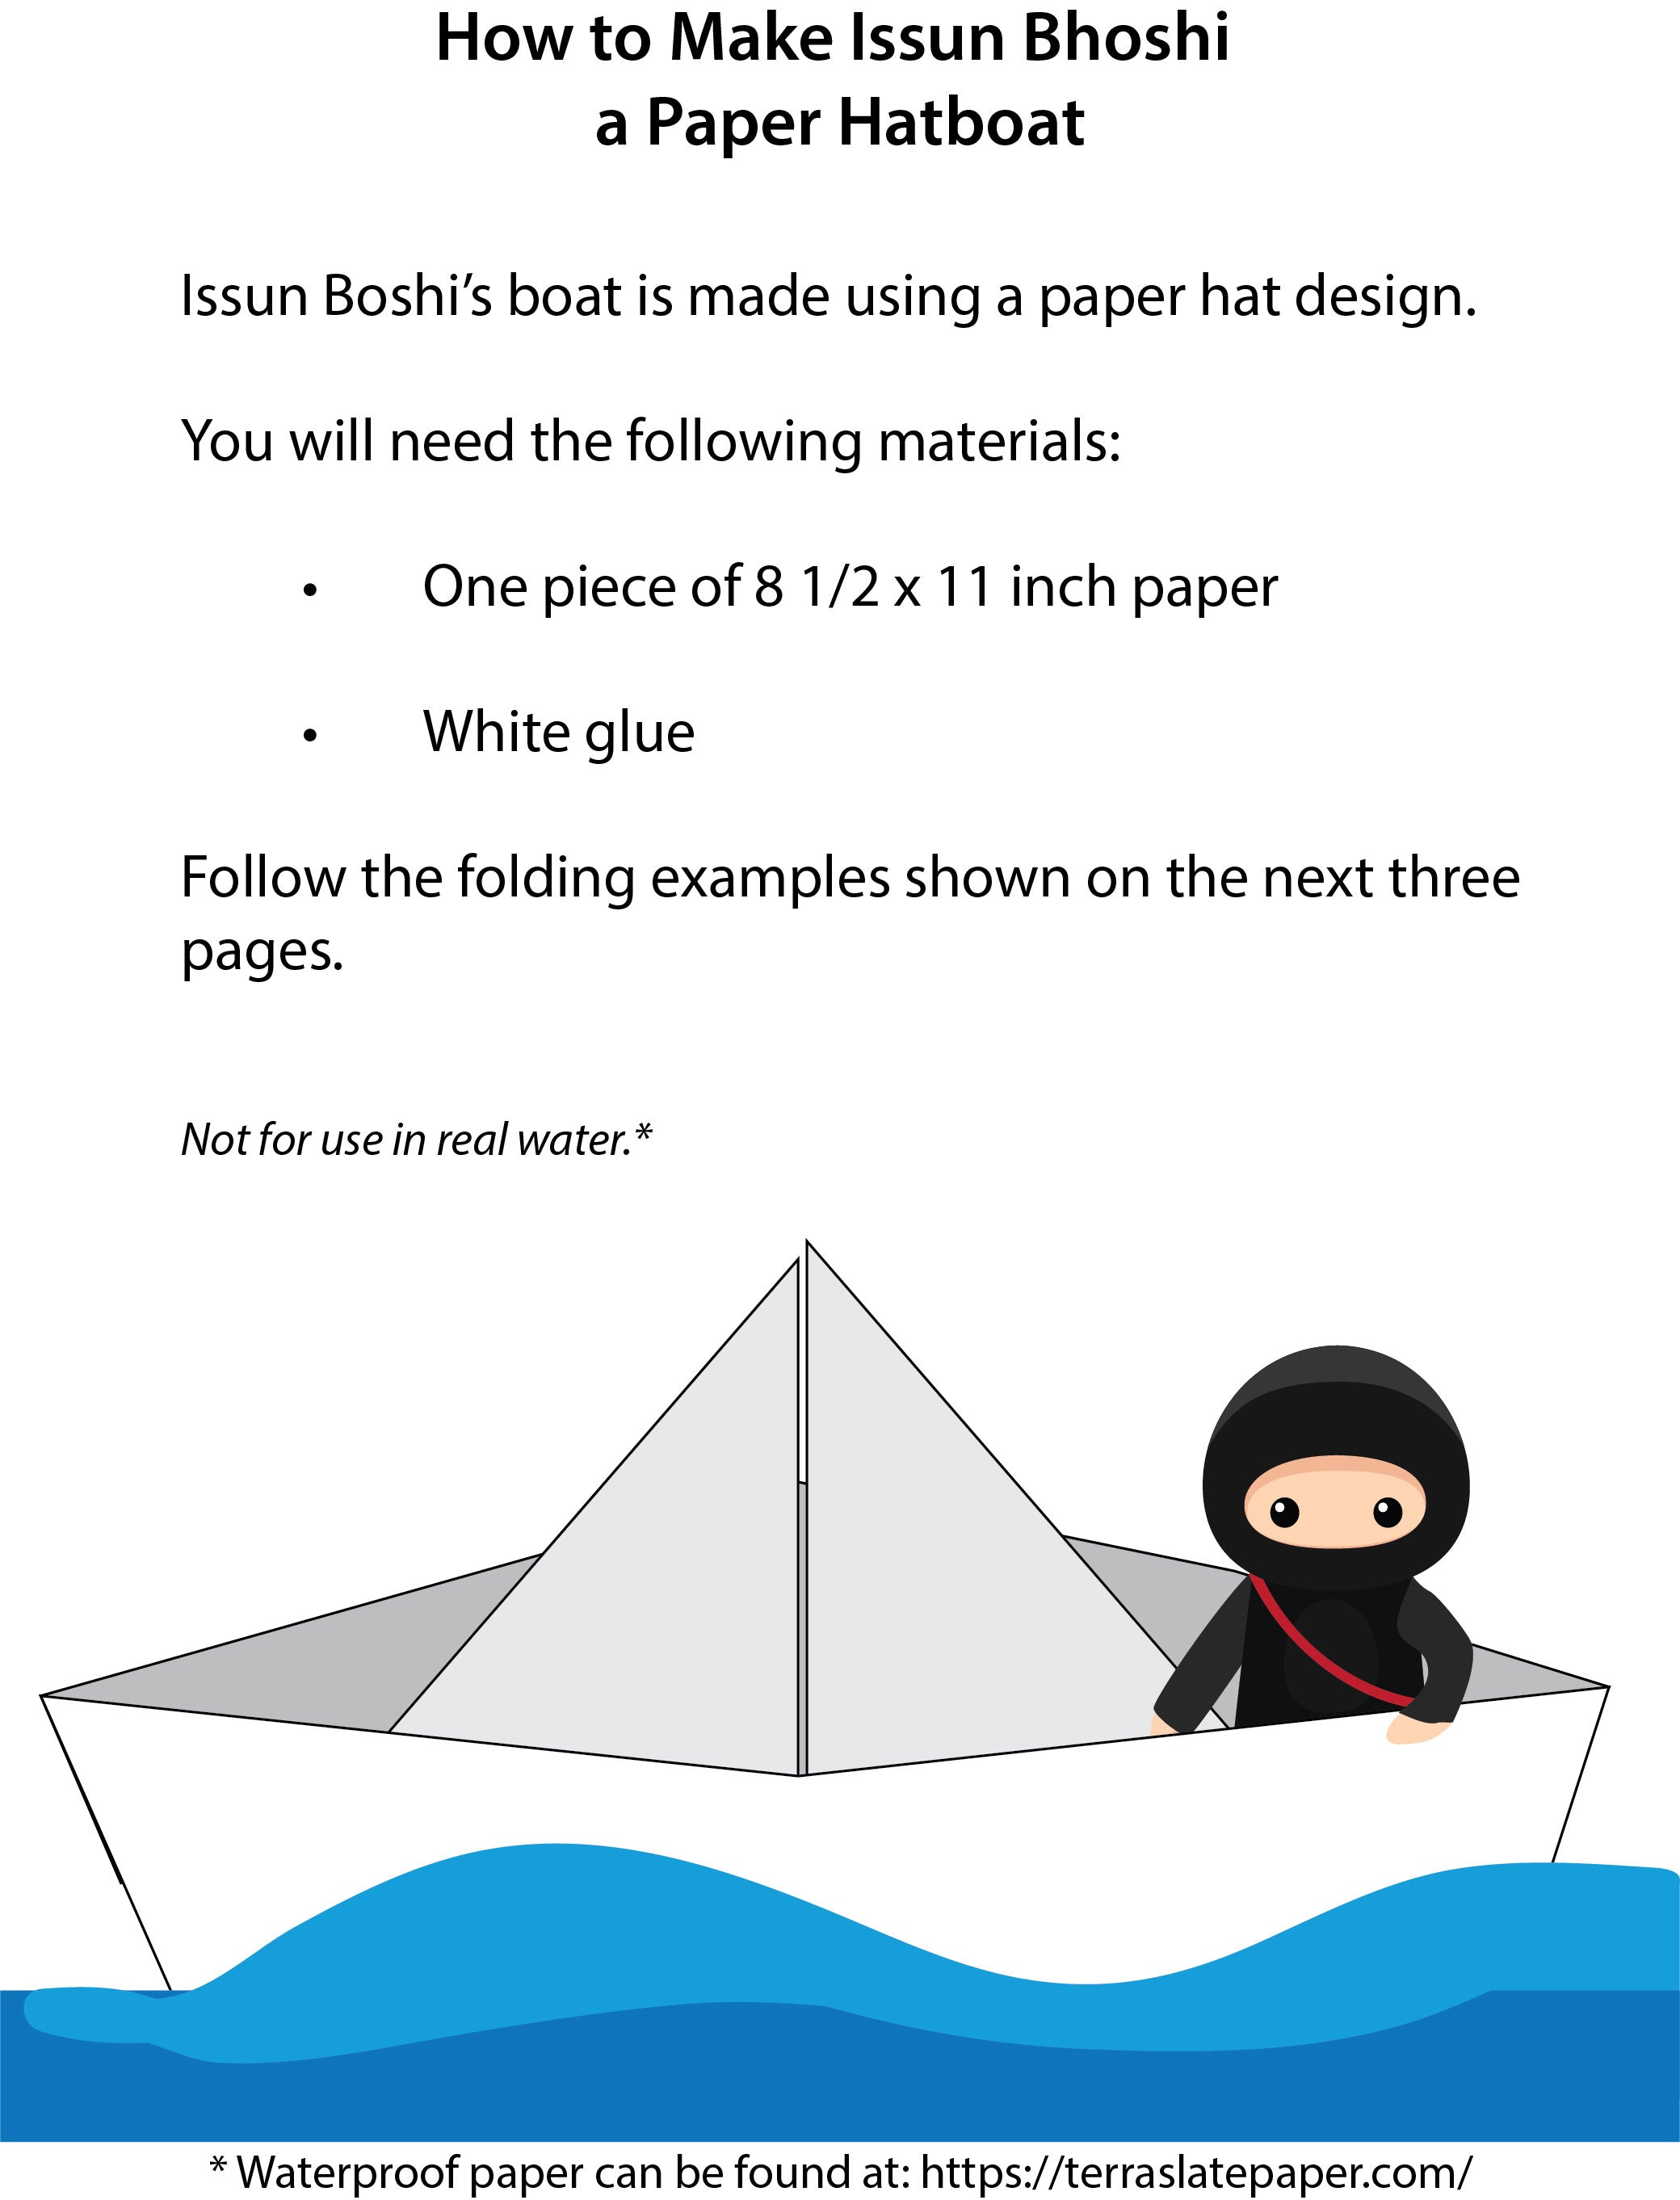 Issun Boshi's Paper Adventure